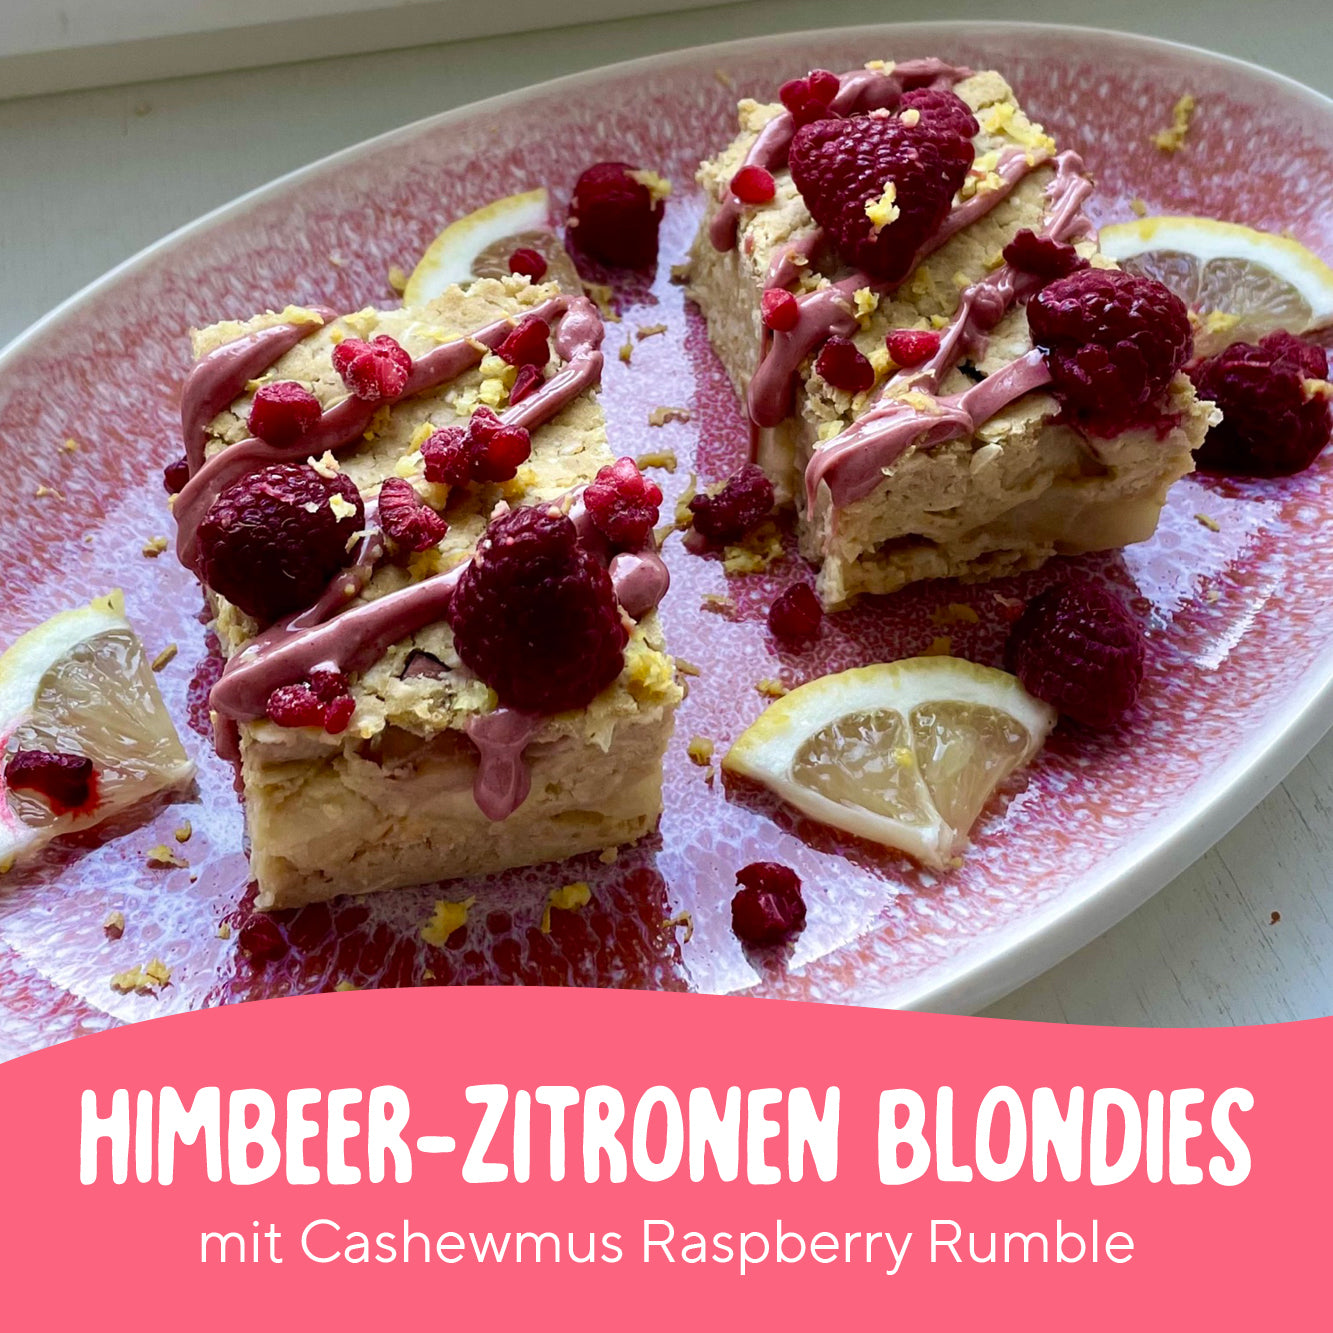 Himbeer-Zitronen Blondies mit Cashewmus Raspberry Rumble